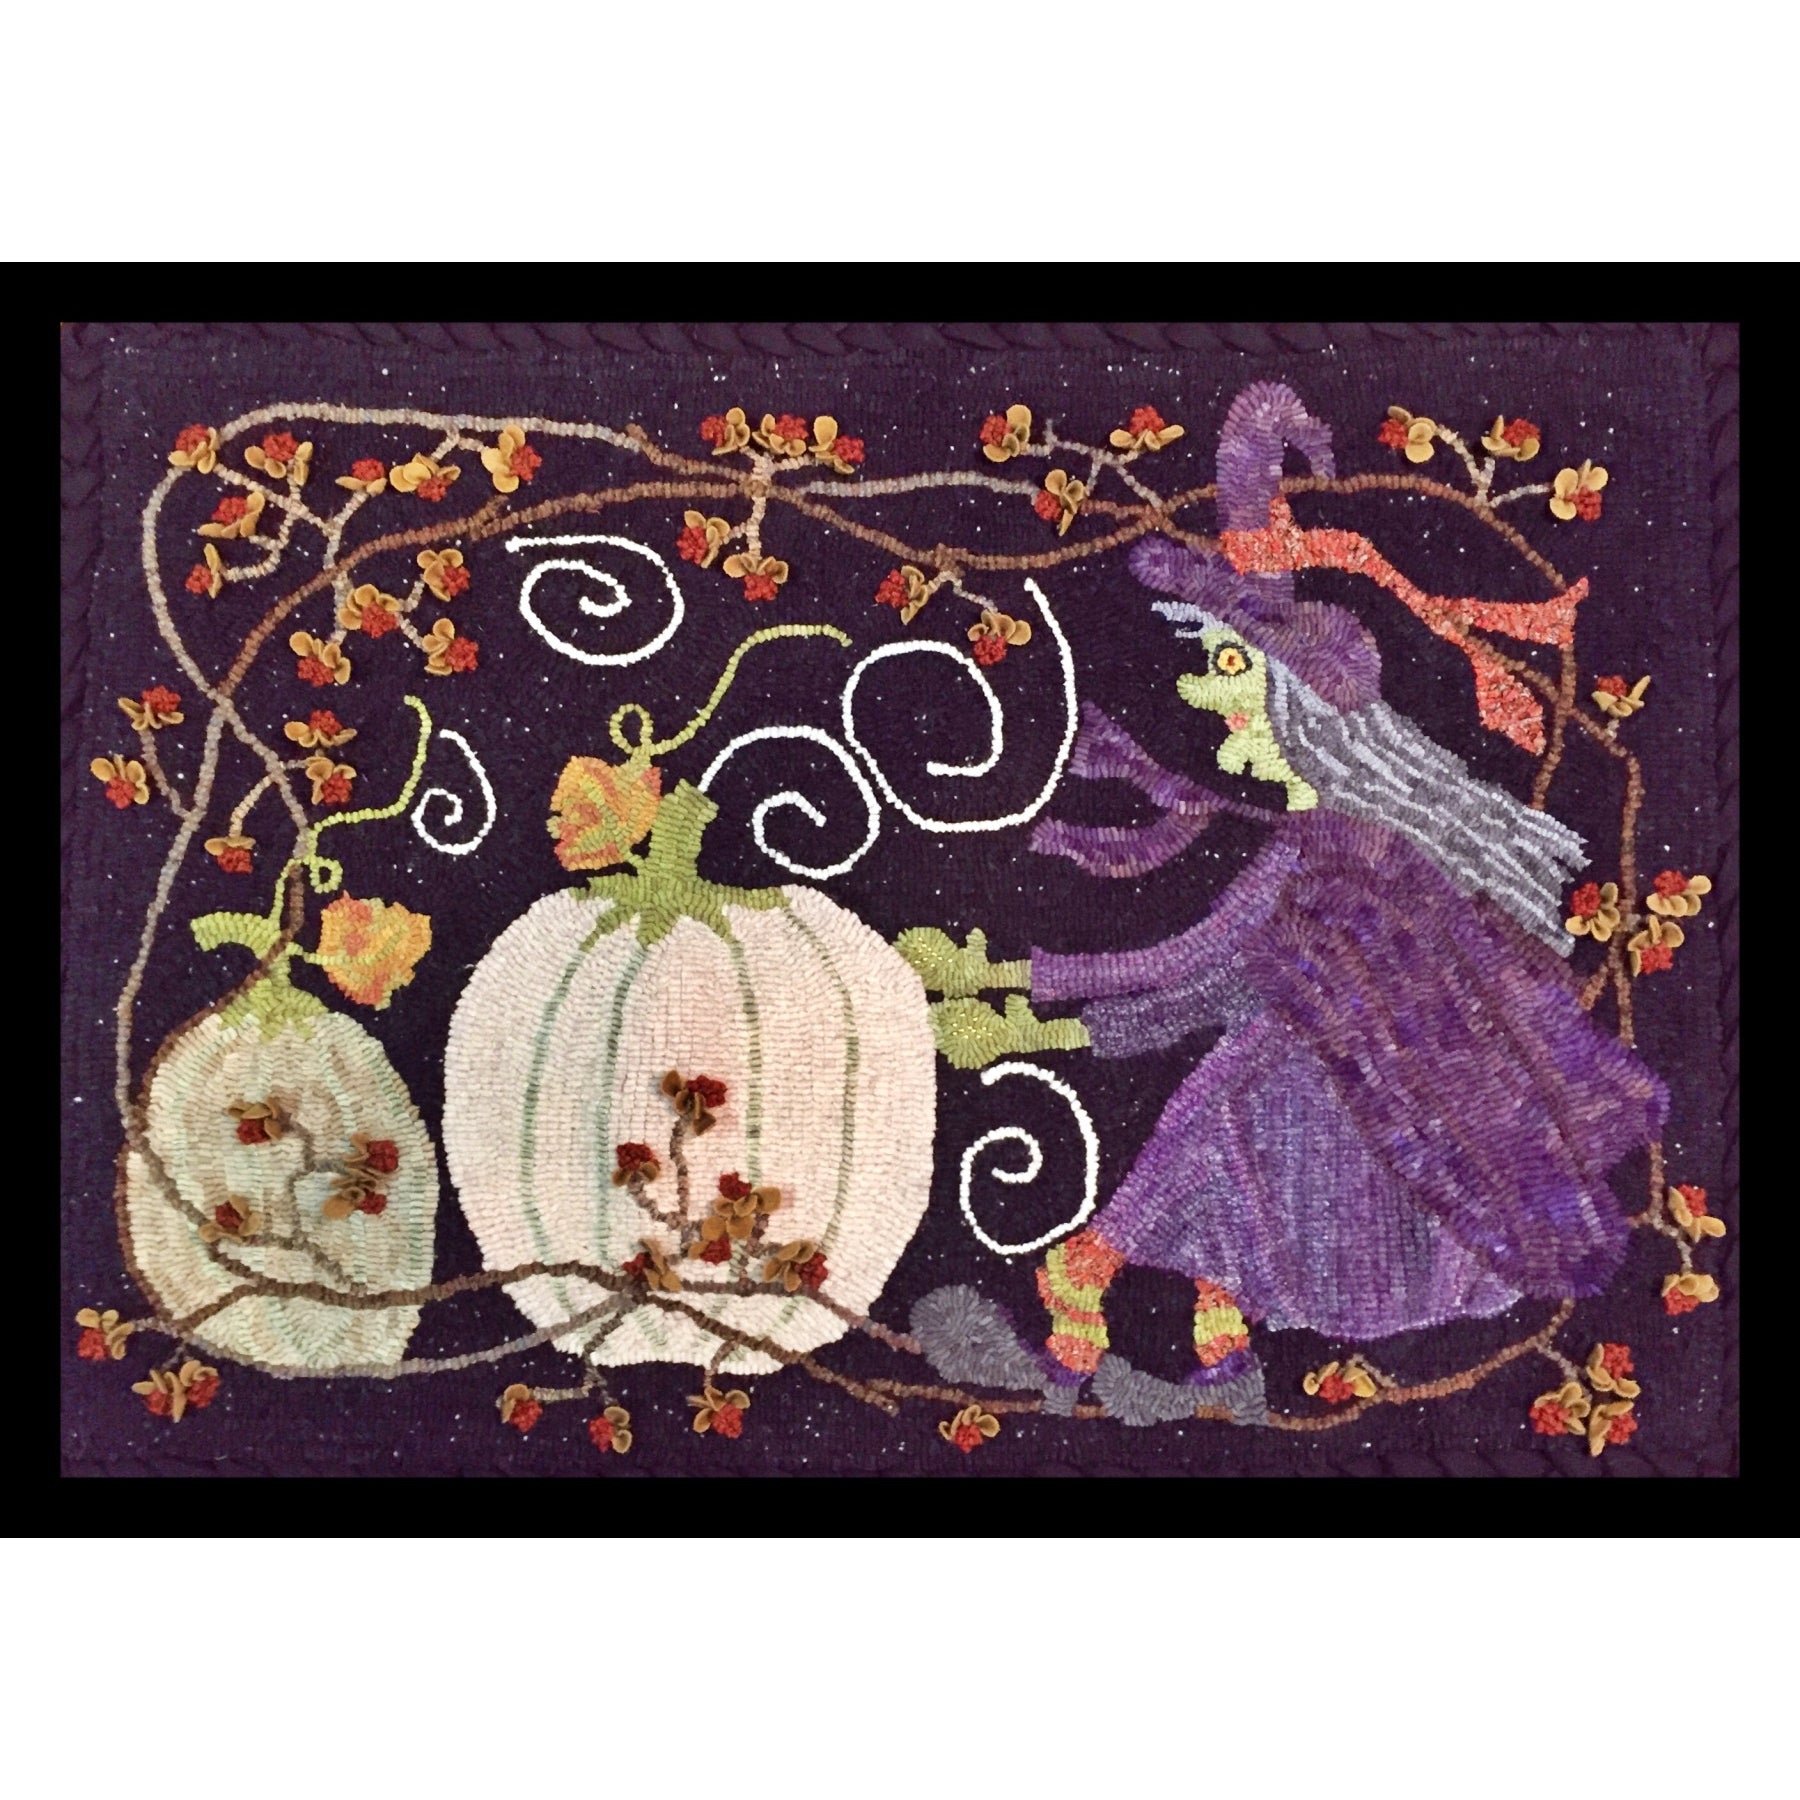 Witch's Pumpkin Search, rug hooked by Karen Barnhart